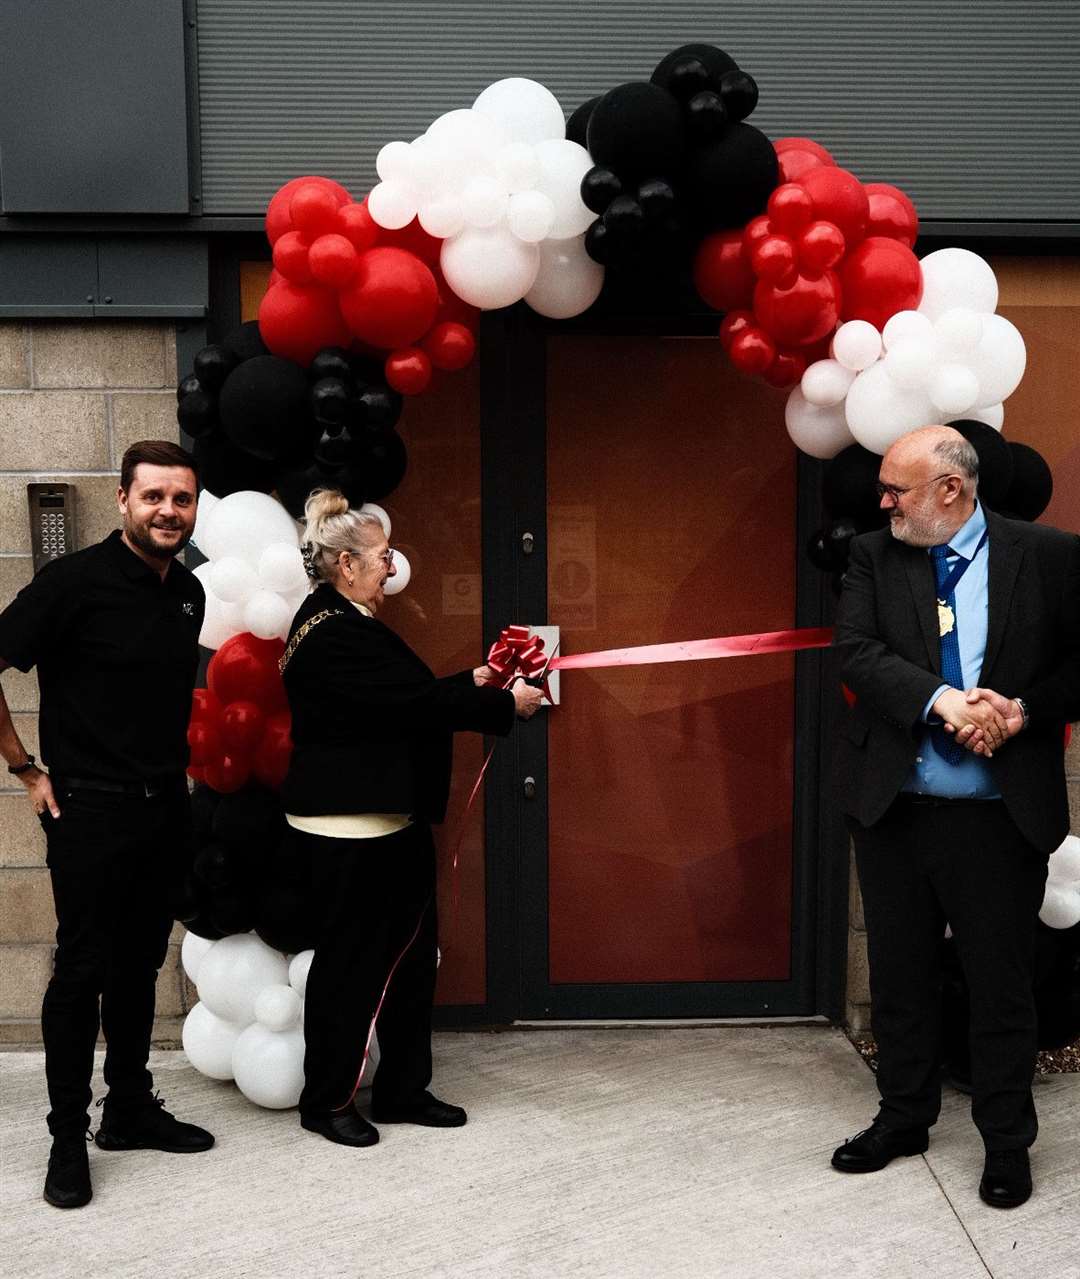 Mayor Rosanna Currans and Dartford council leader Jeremy Kite opened the new facility on Friday. Photo: ARC-UK Ltd/ Sharp Mind Communications